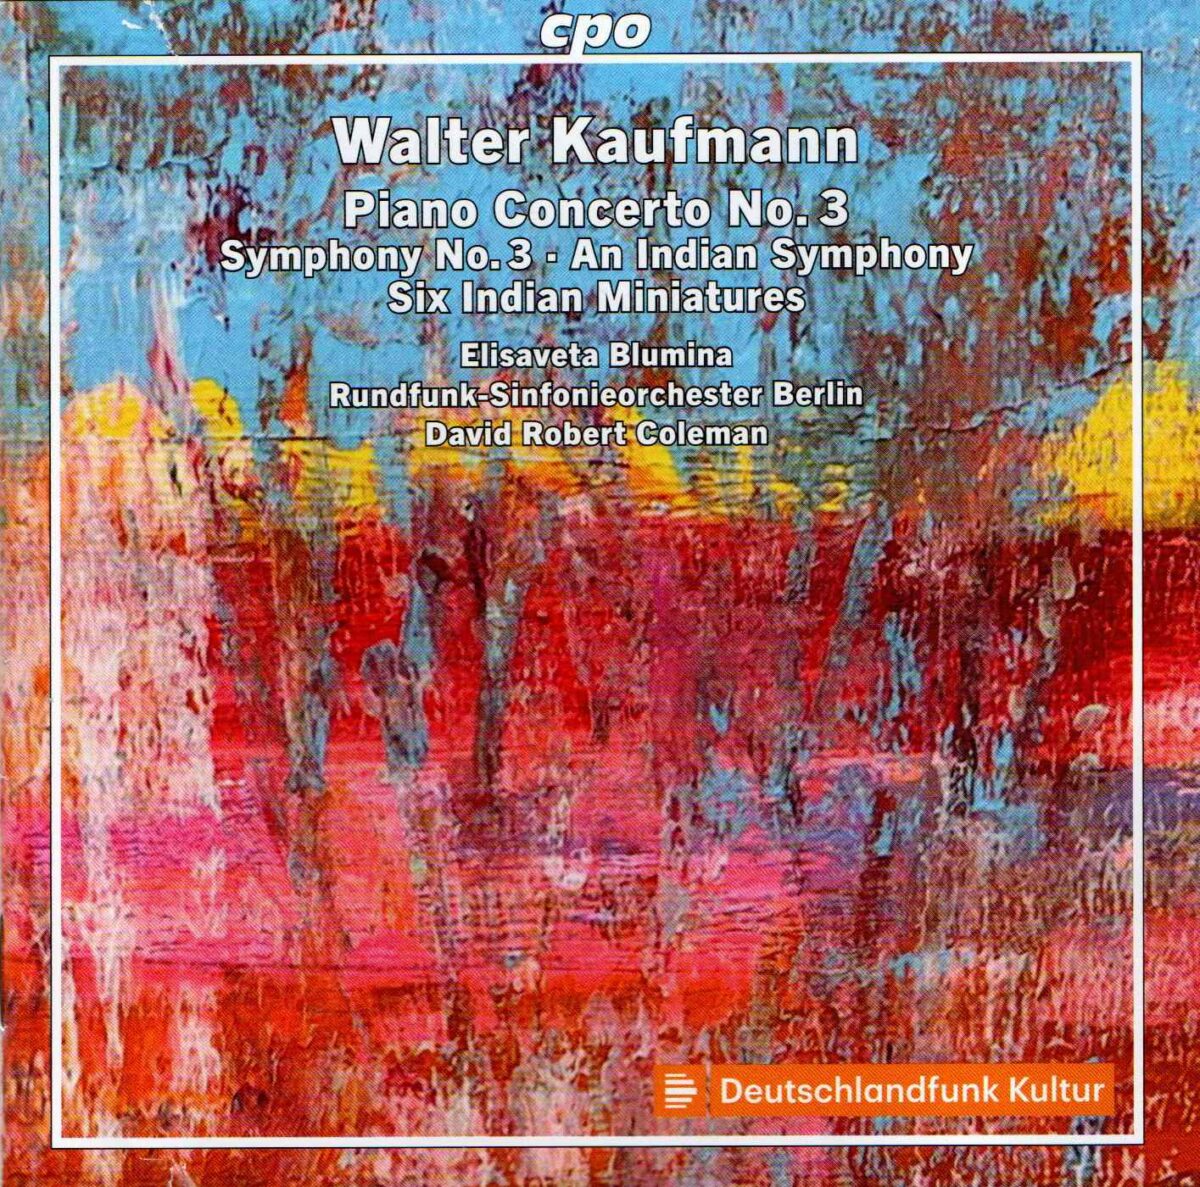 CD-Rezension: Walter Kaufmann Piano Concerto No. 3, Symphony No. 3, An Indian Symphony, Six Indian Miniatures  klassik-begeistert.de, 12. Juni 2024